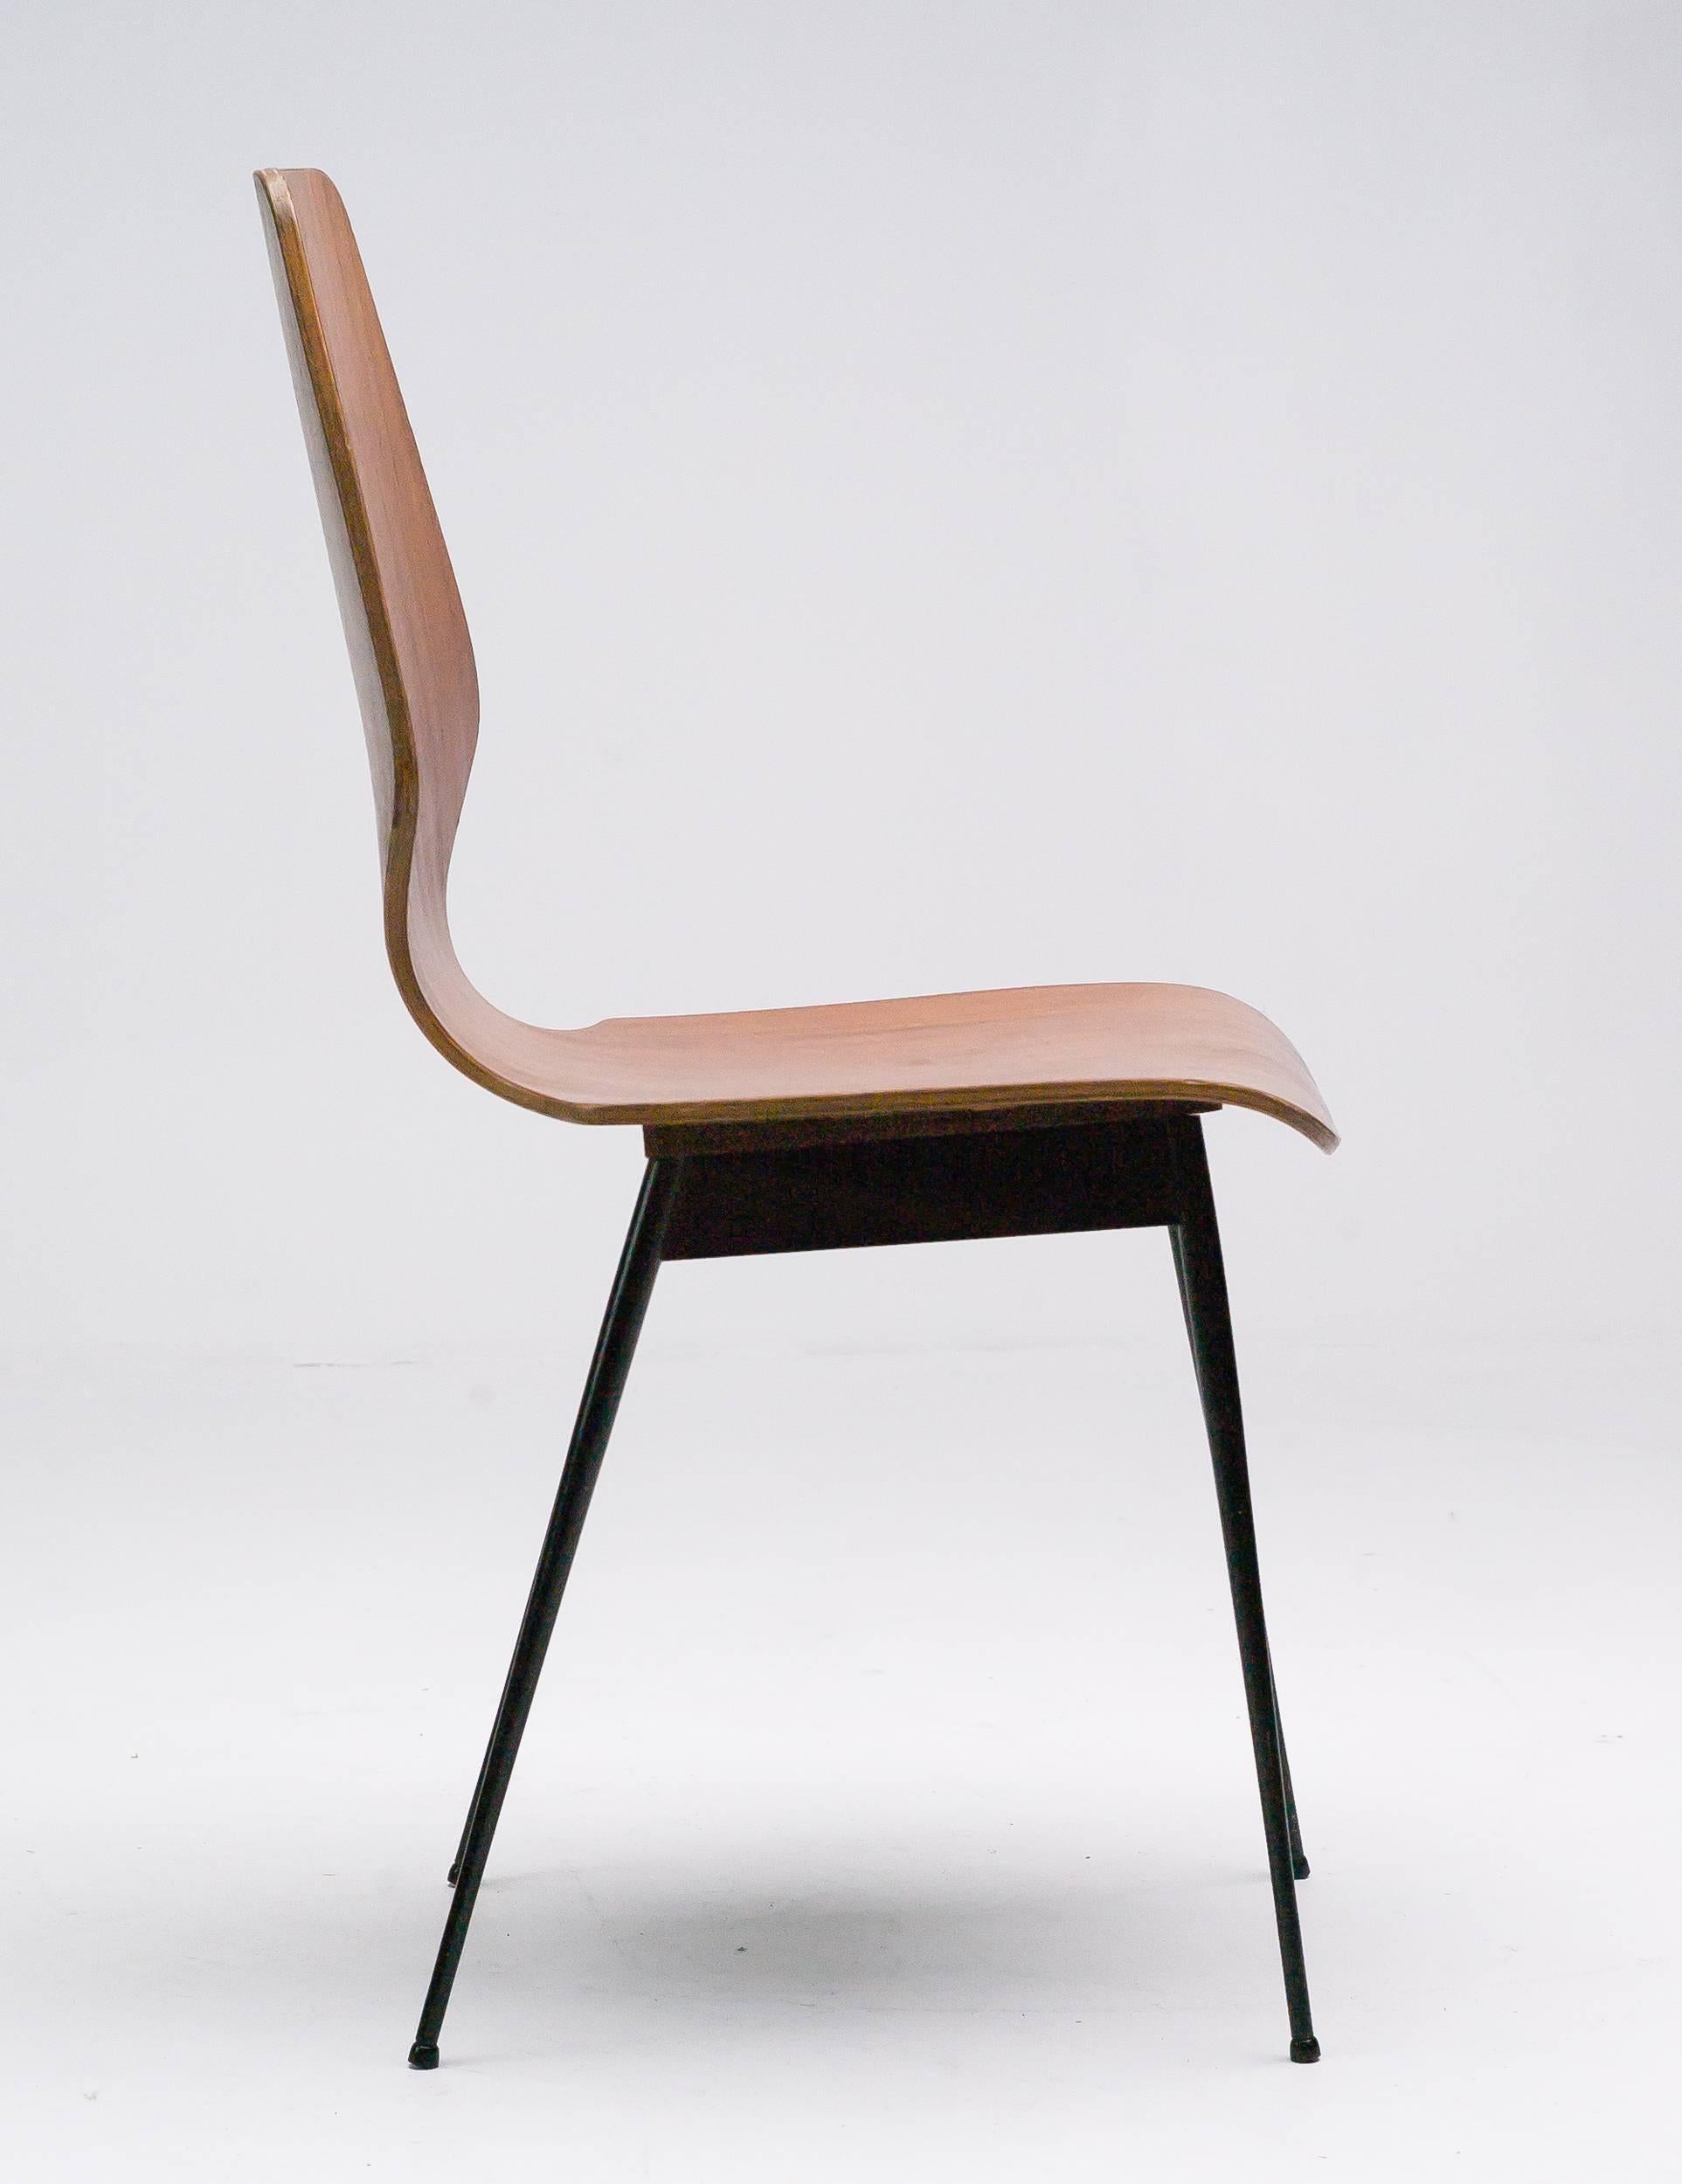 Steel Elegant Italian Plywood Dining Chairs